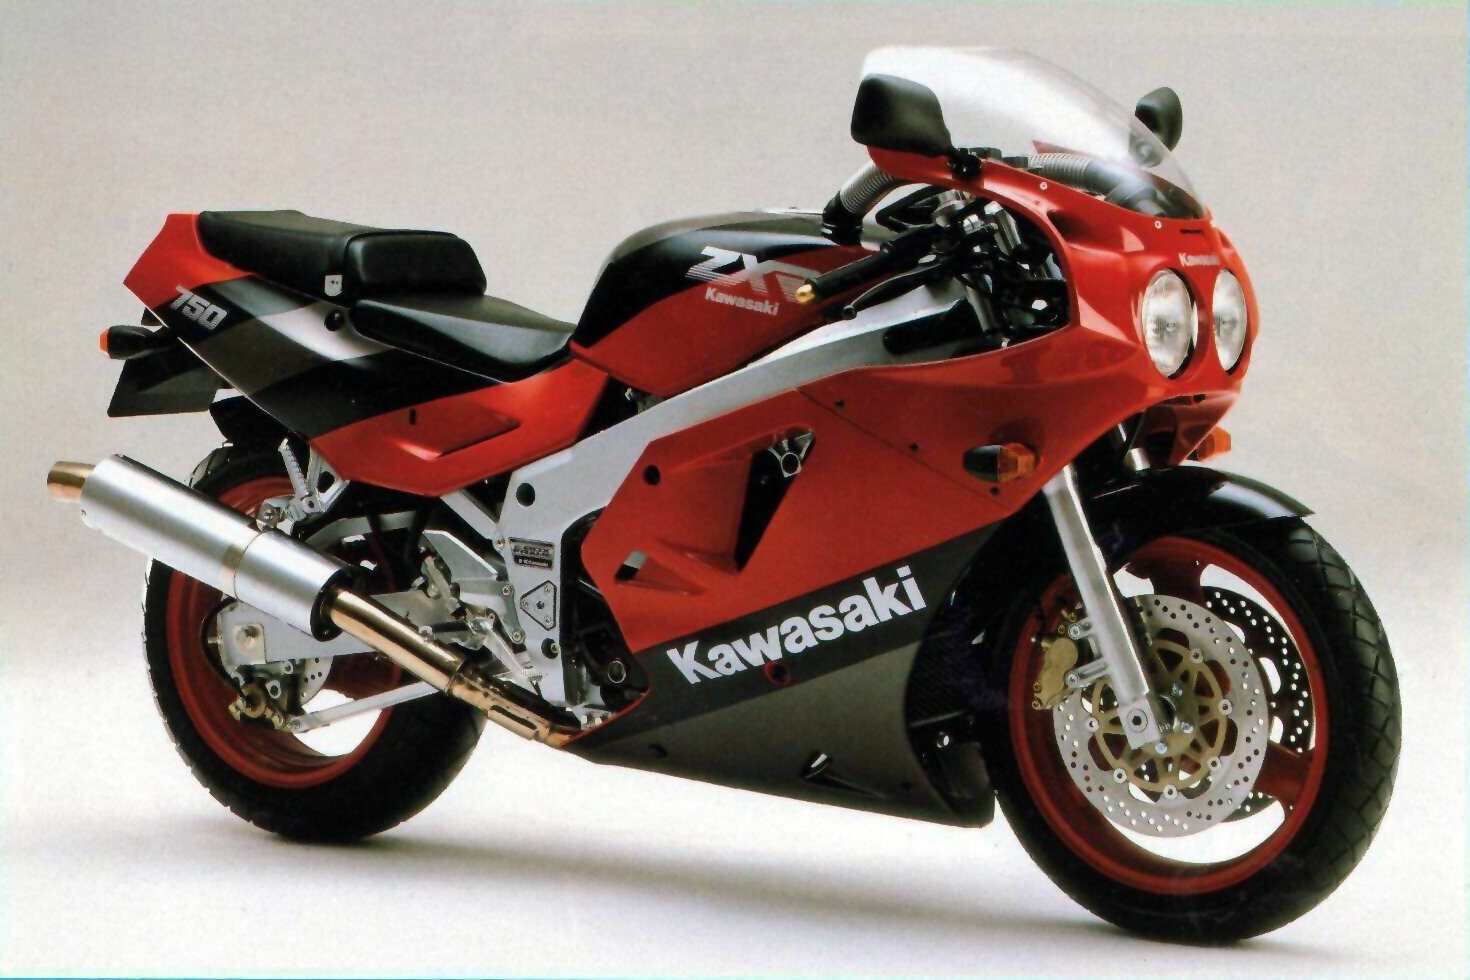 Moto del día: Kawasaki ZXR 750 Ninja/Stinger (H1/H2)